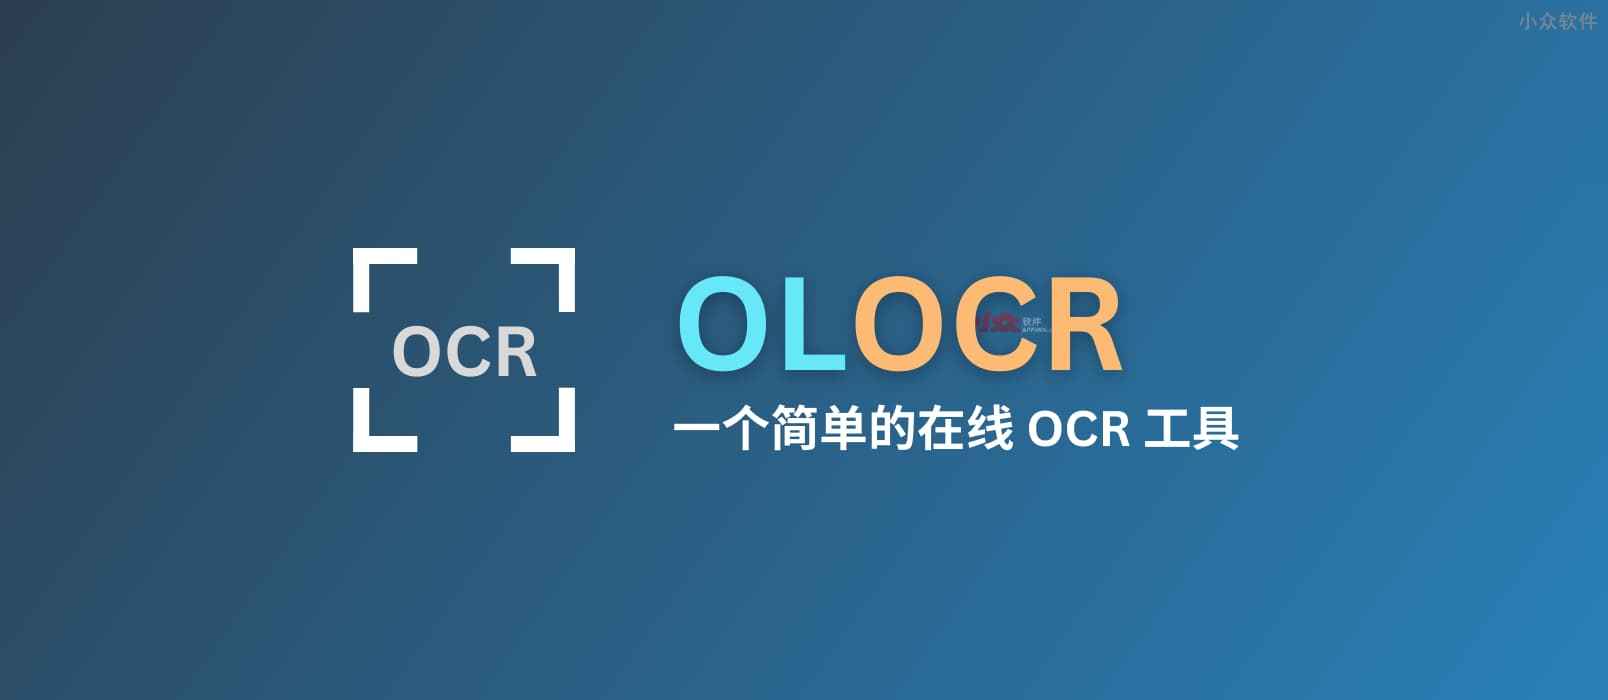 OLOCR - 一个简单易用的在线 OCR 文字识别工具，支持图片、PDF